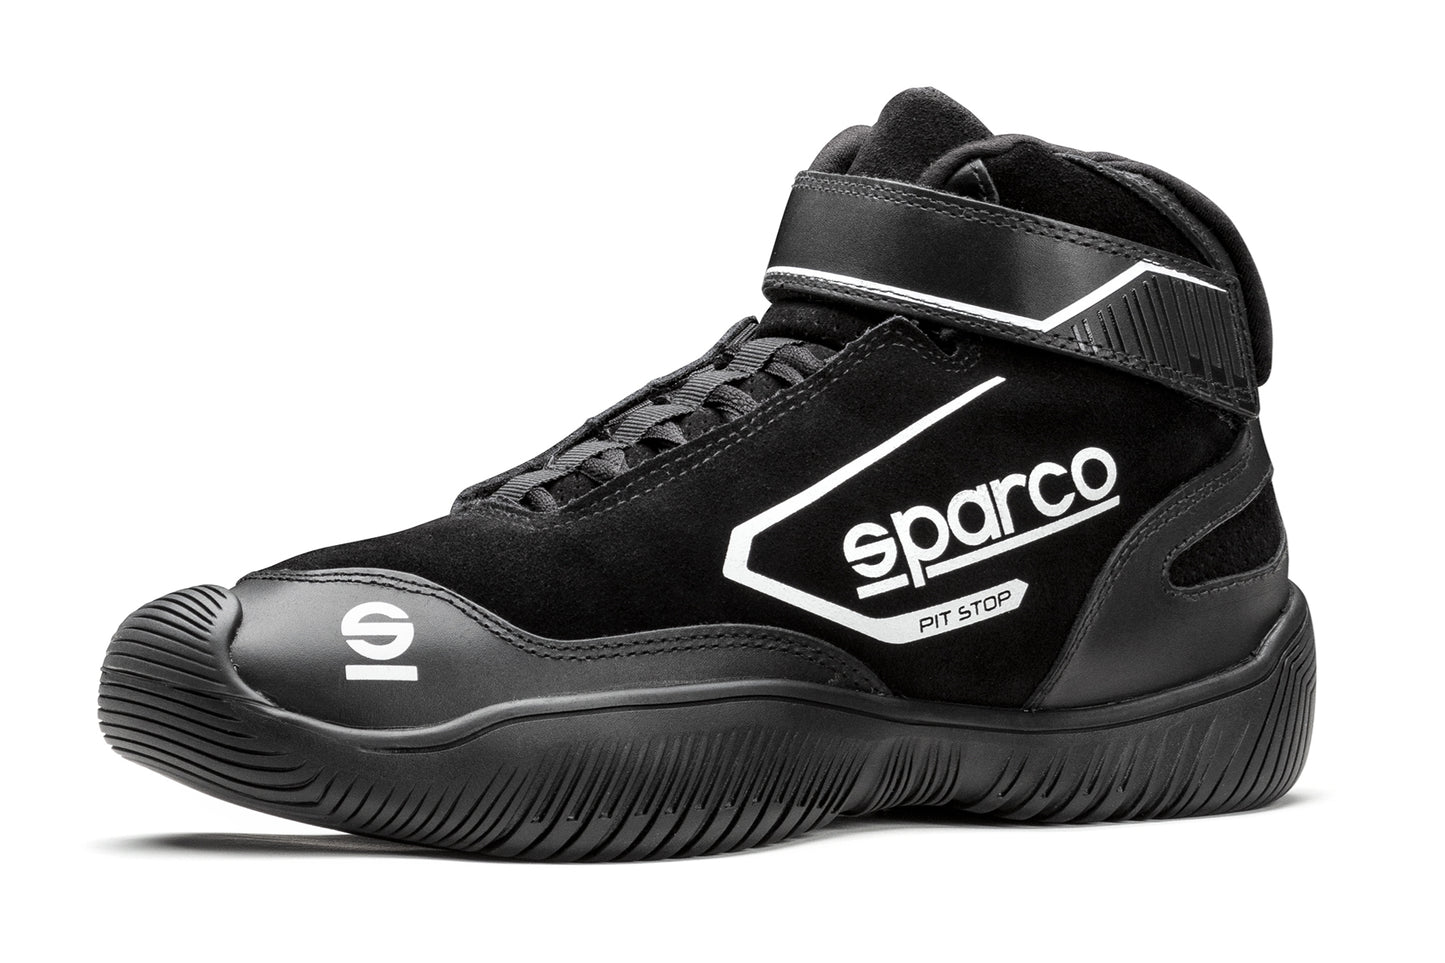 Sparco Pit Stop Shoes